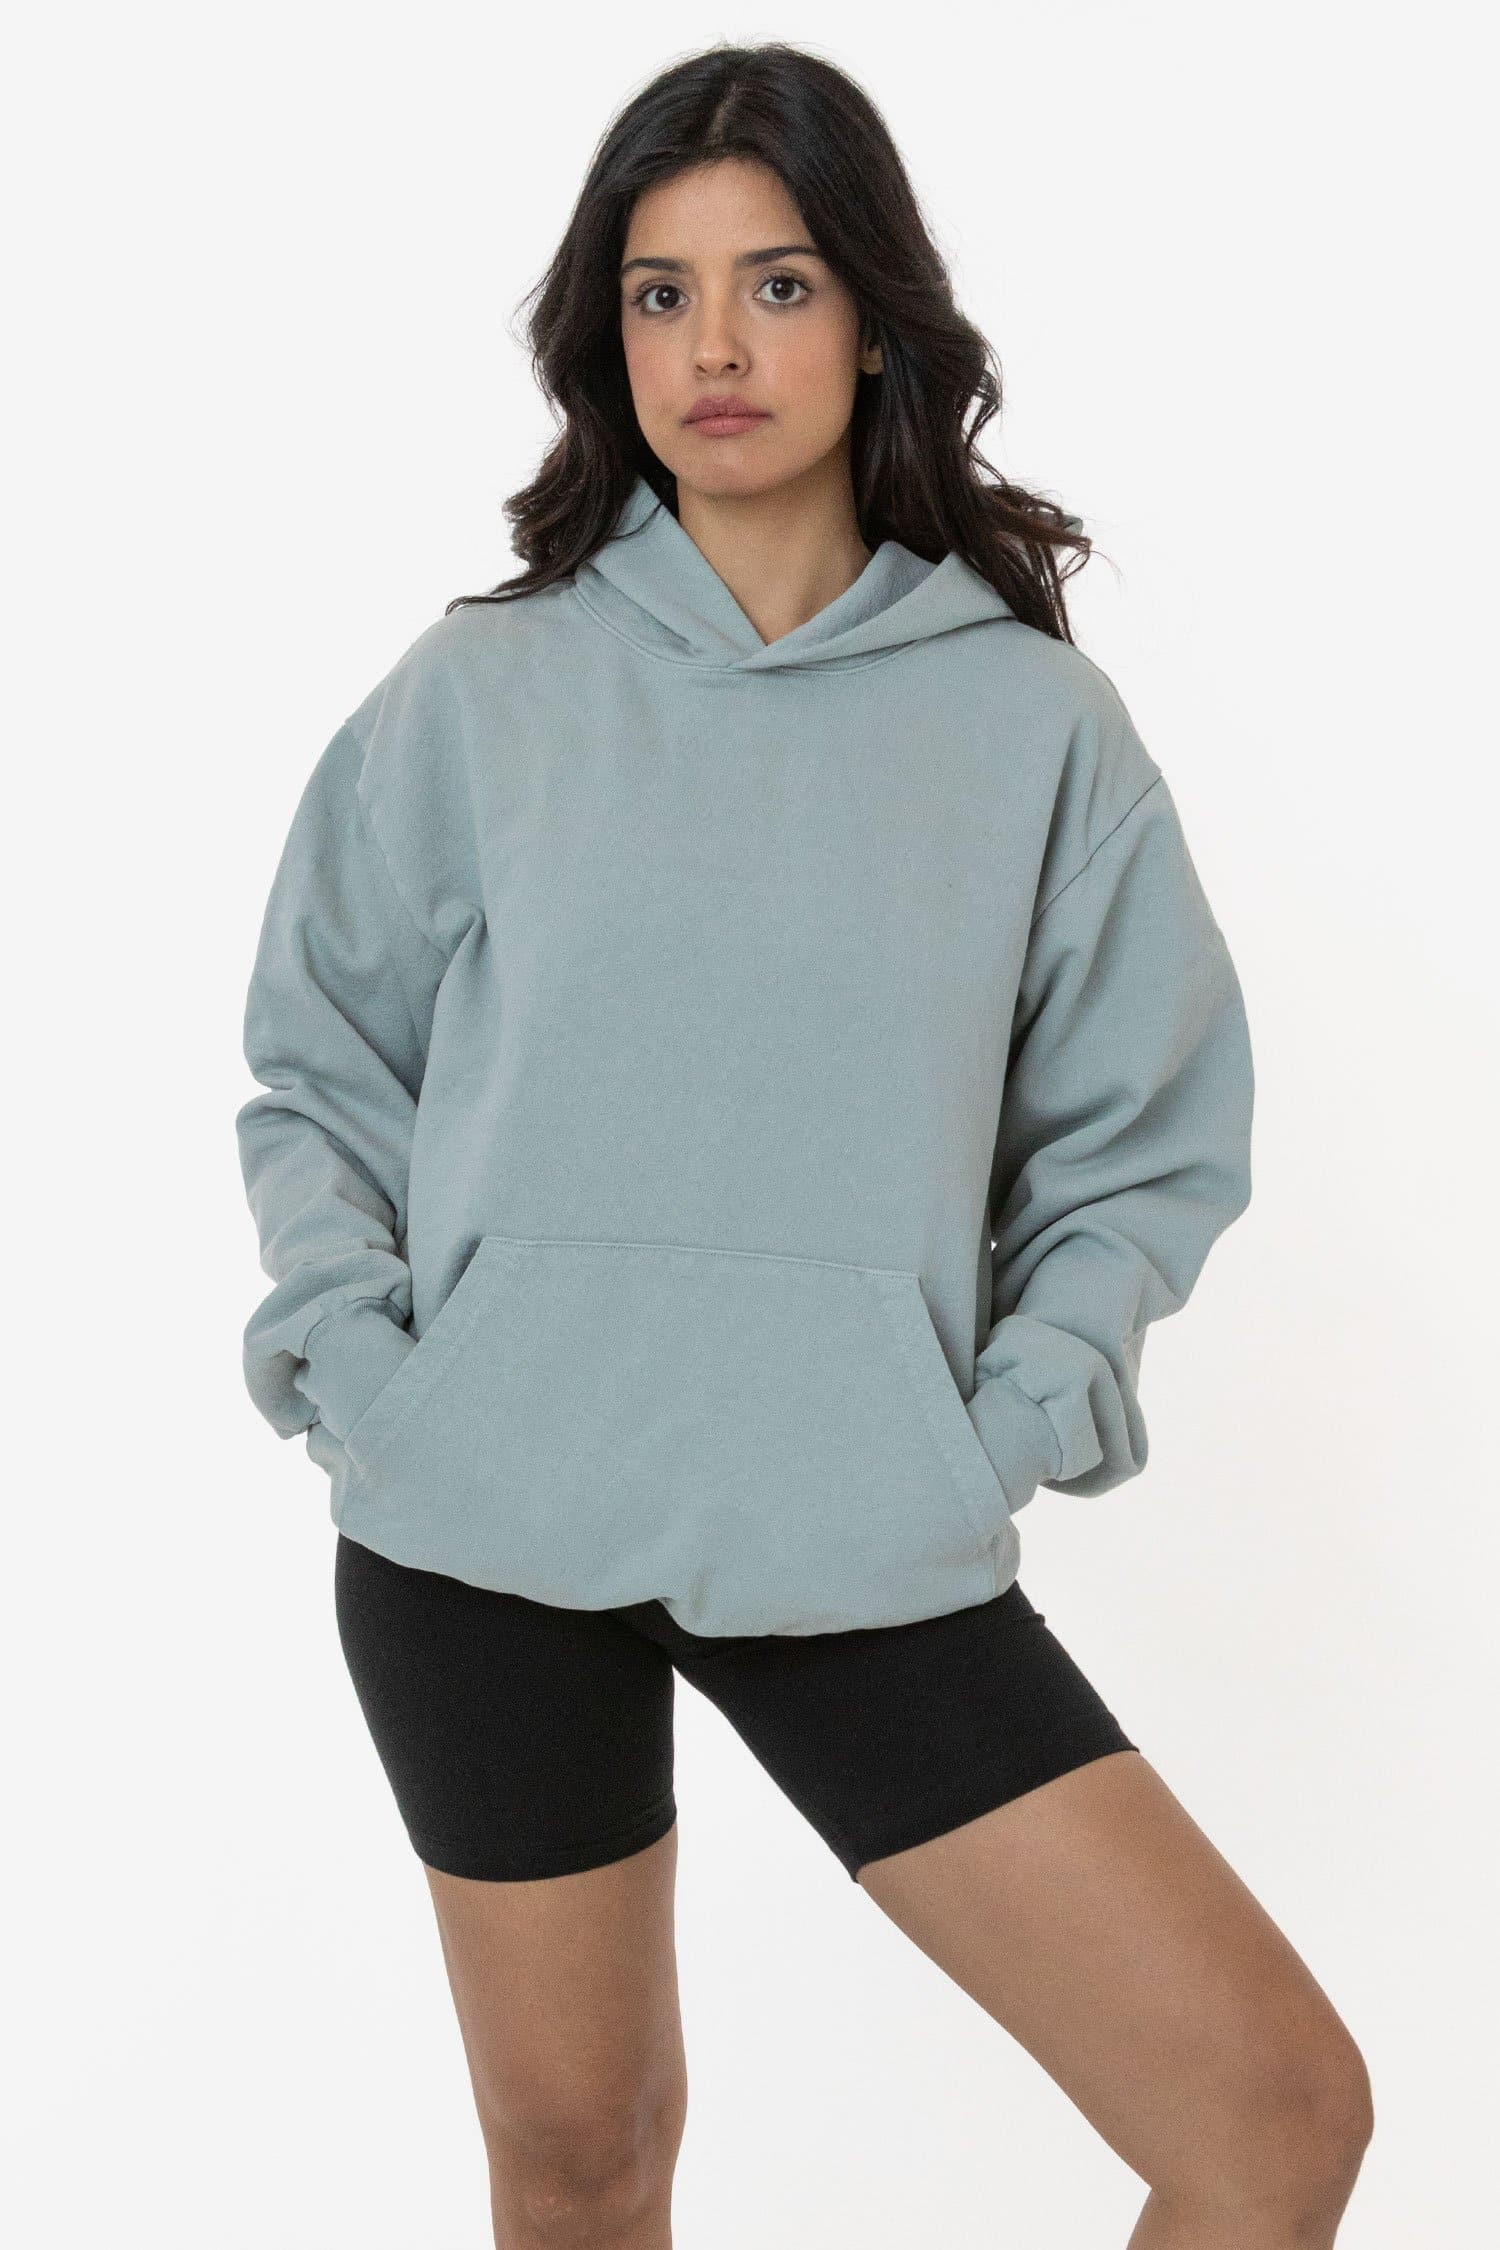 Los Angeles Apparel | Garment Dye Heavy Fleece Hooded Pullover Sweatshirt (New & Now) for Men in Dolphin Blue, Size Medium